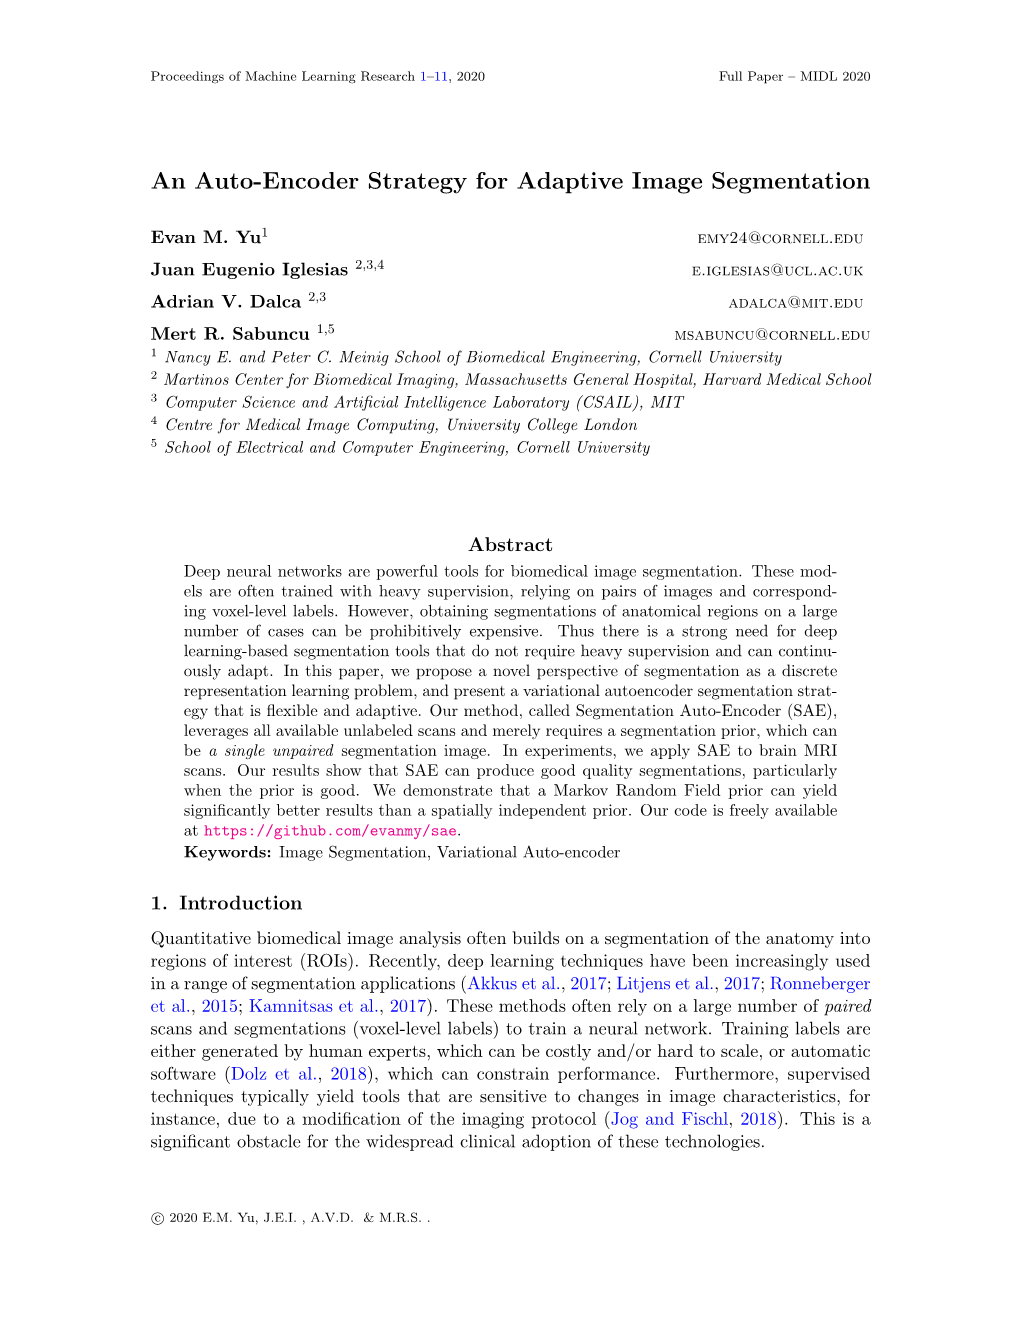 An Auto-Encoder Strategy for Adaptive Image Segmentation